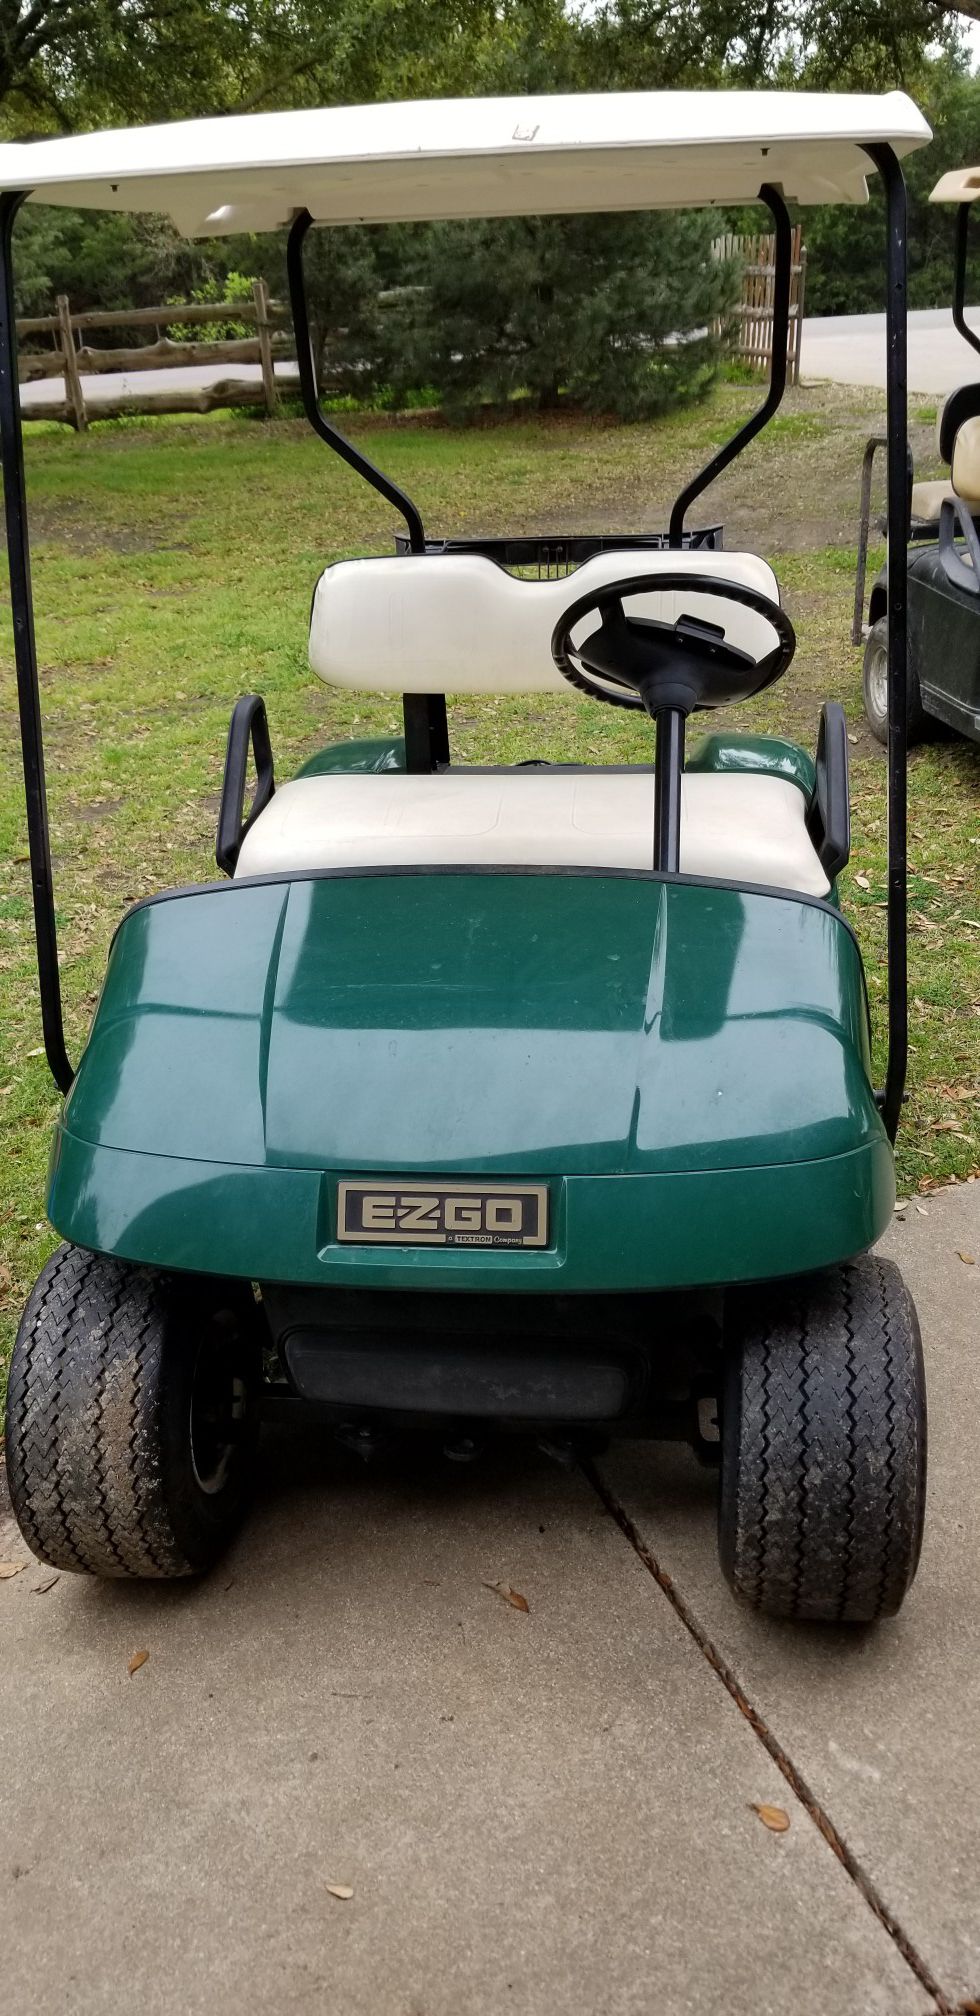 Ezgo electric golf cart 1998